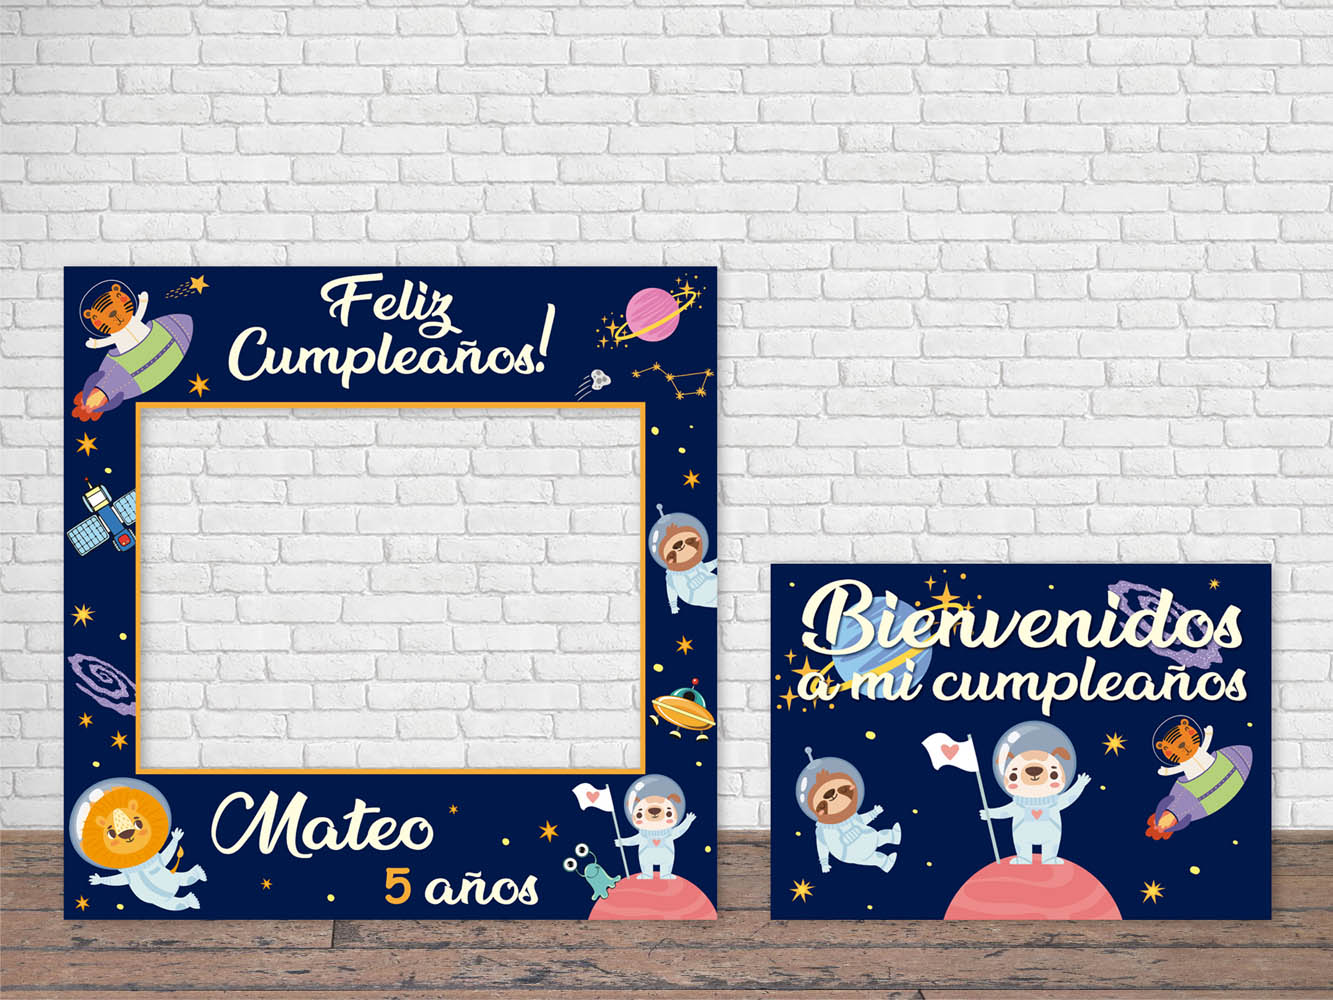 Photocall Infantil Cumpleaños Espacio + Cartel